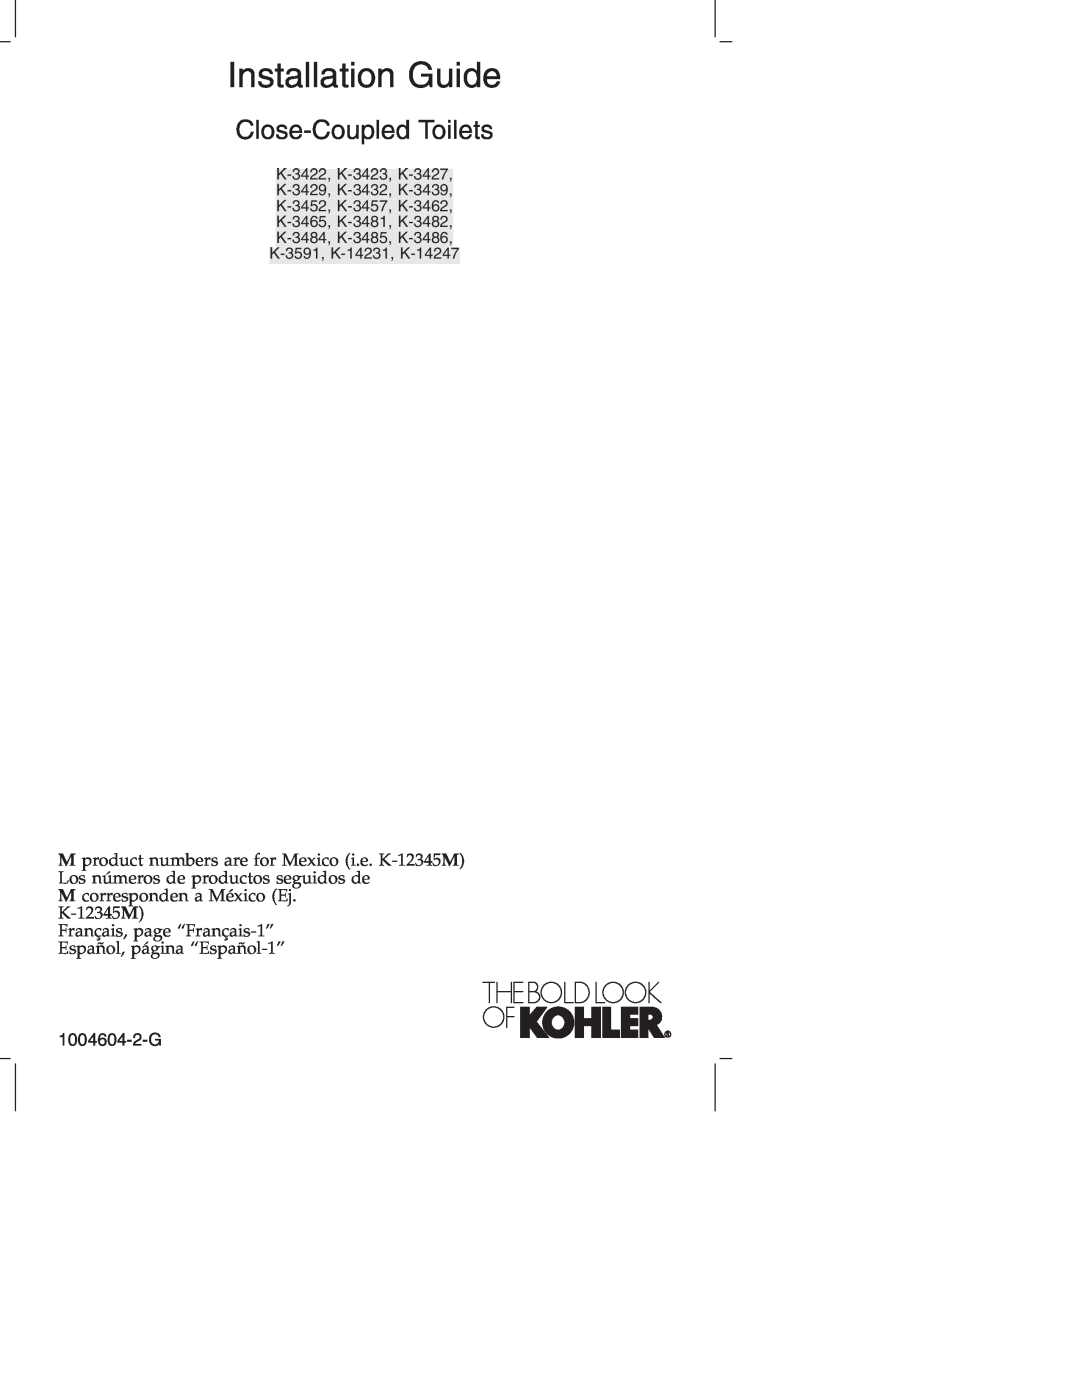 Kohler K3429, K3427, K3428, K3423, K3422 manual Close-CoupledToilets, Installation Guide 